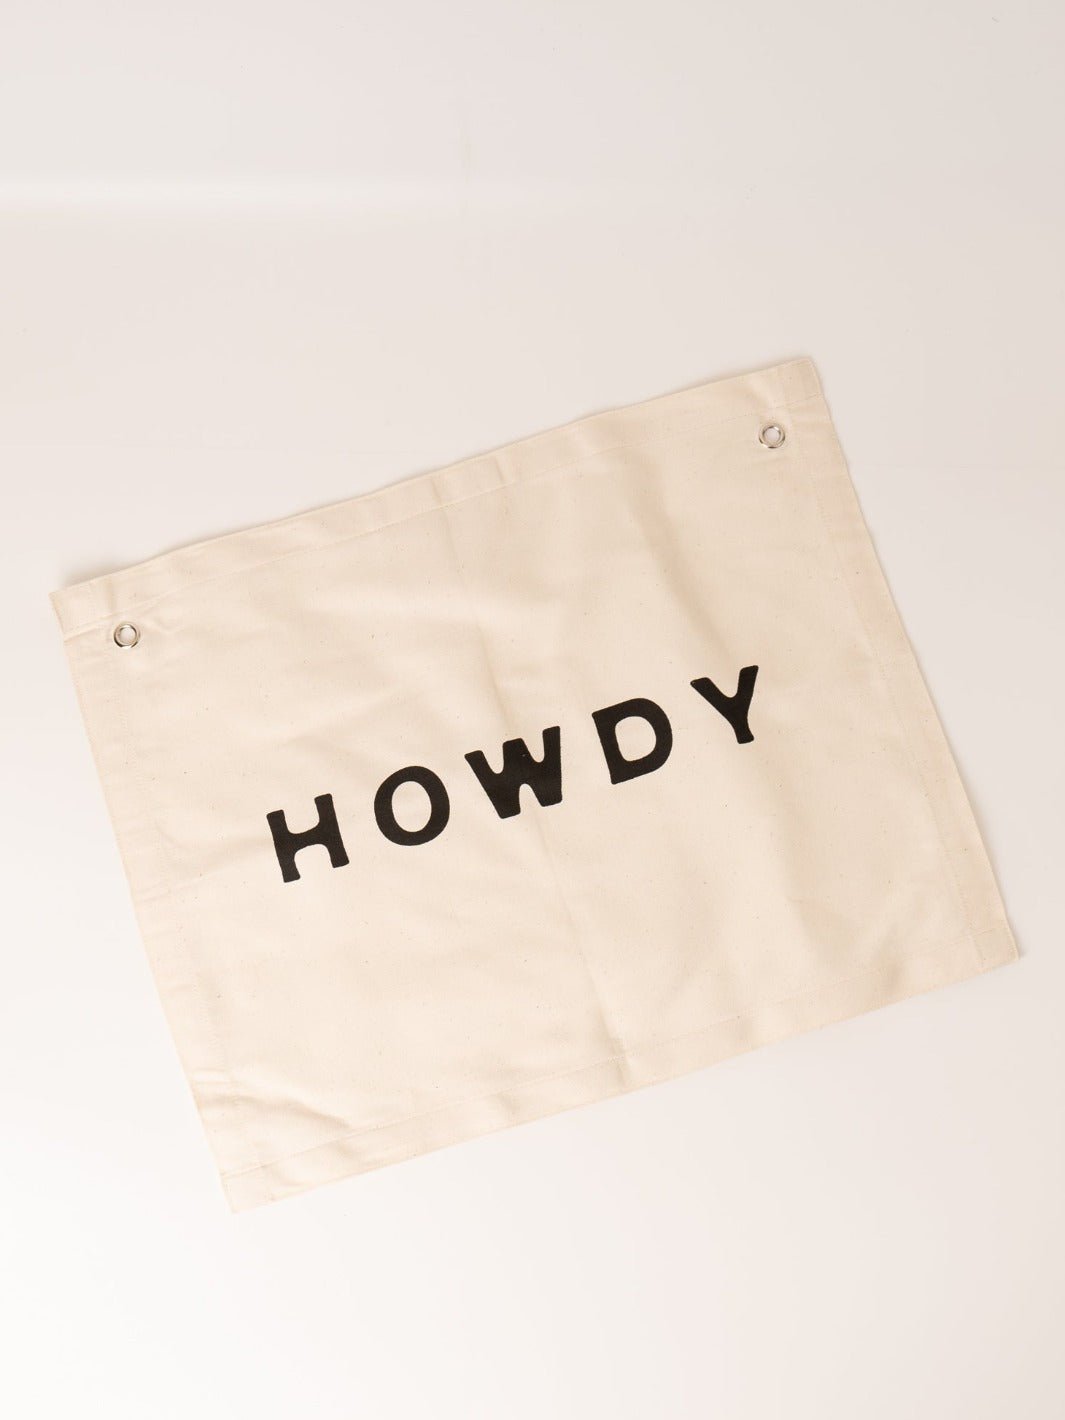 Howdy Canvas Banner - Heyday